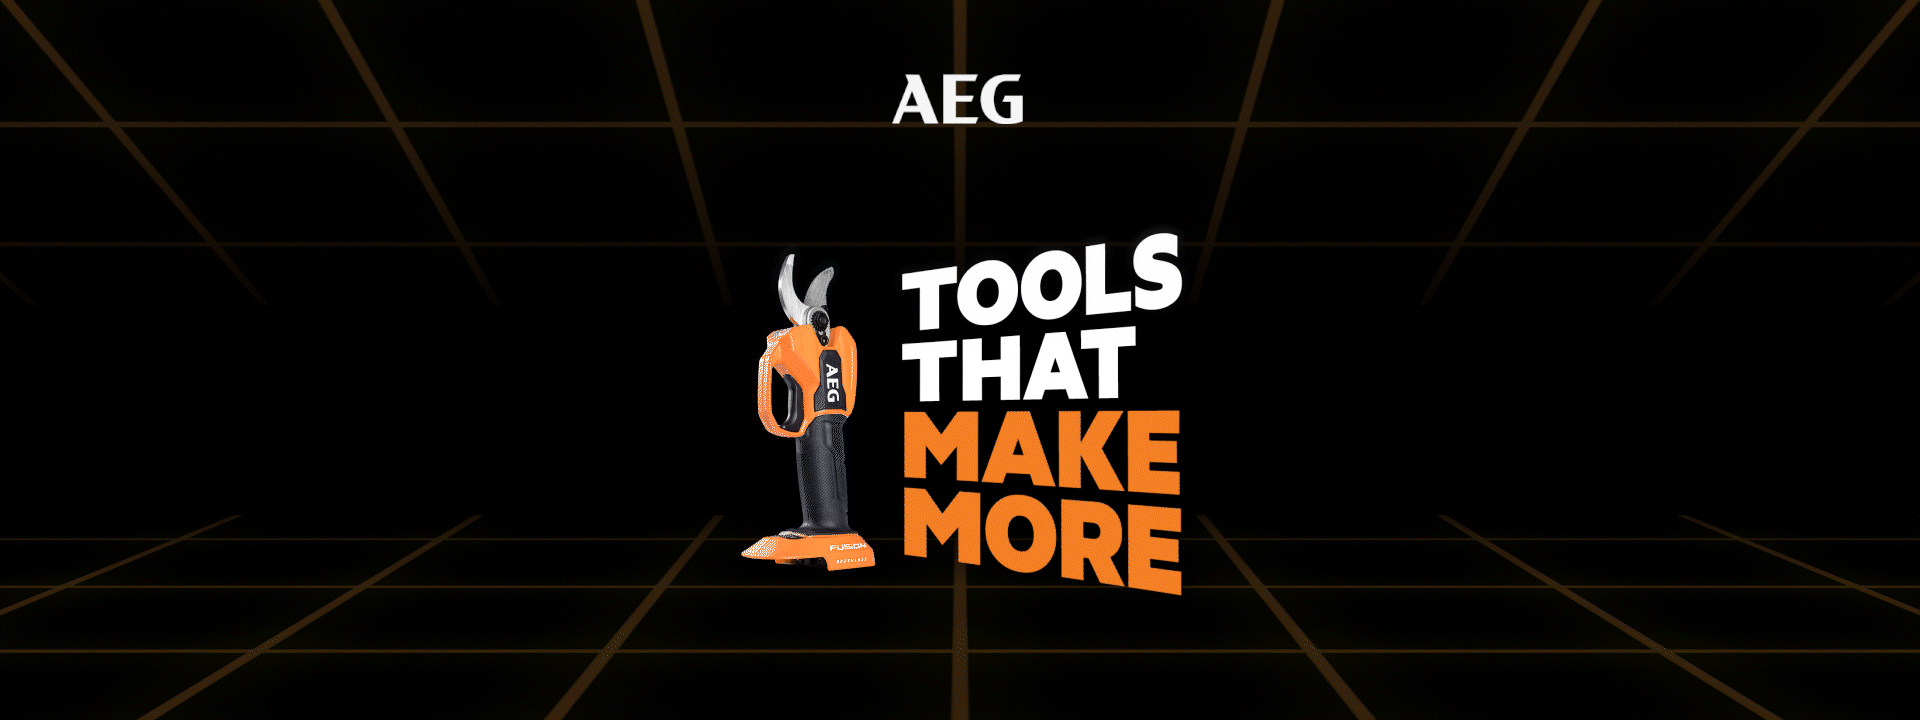 Tools that make more